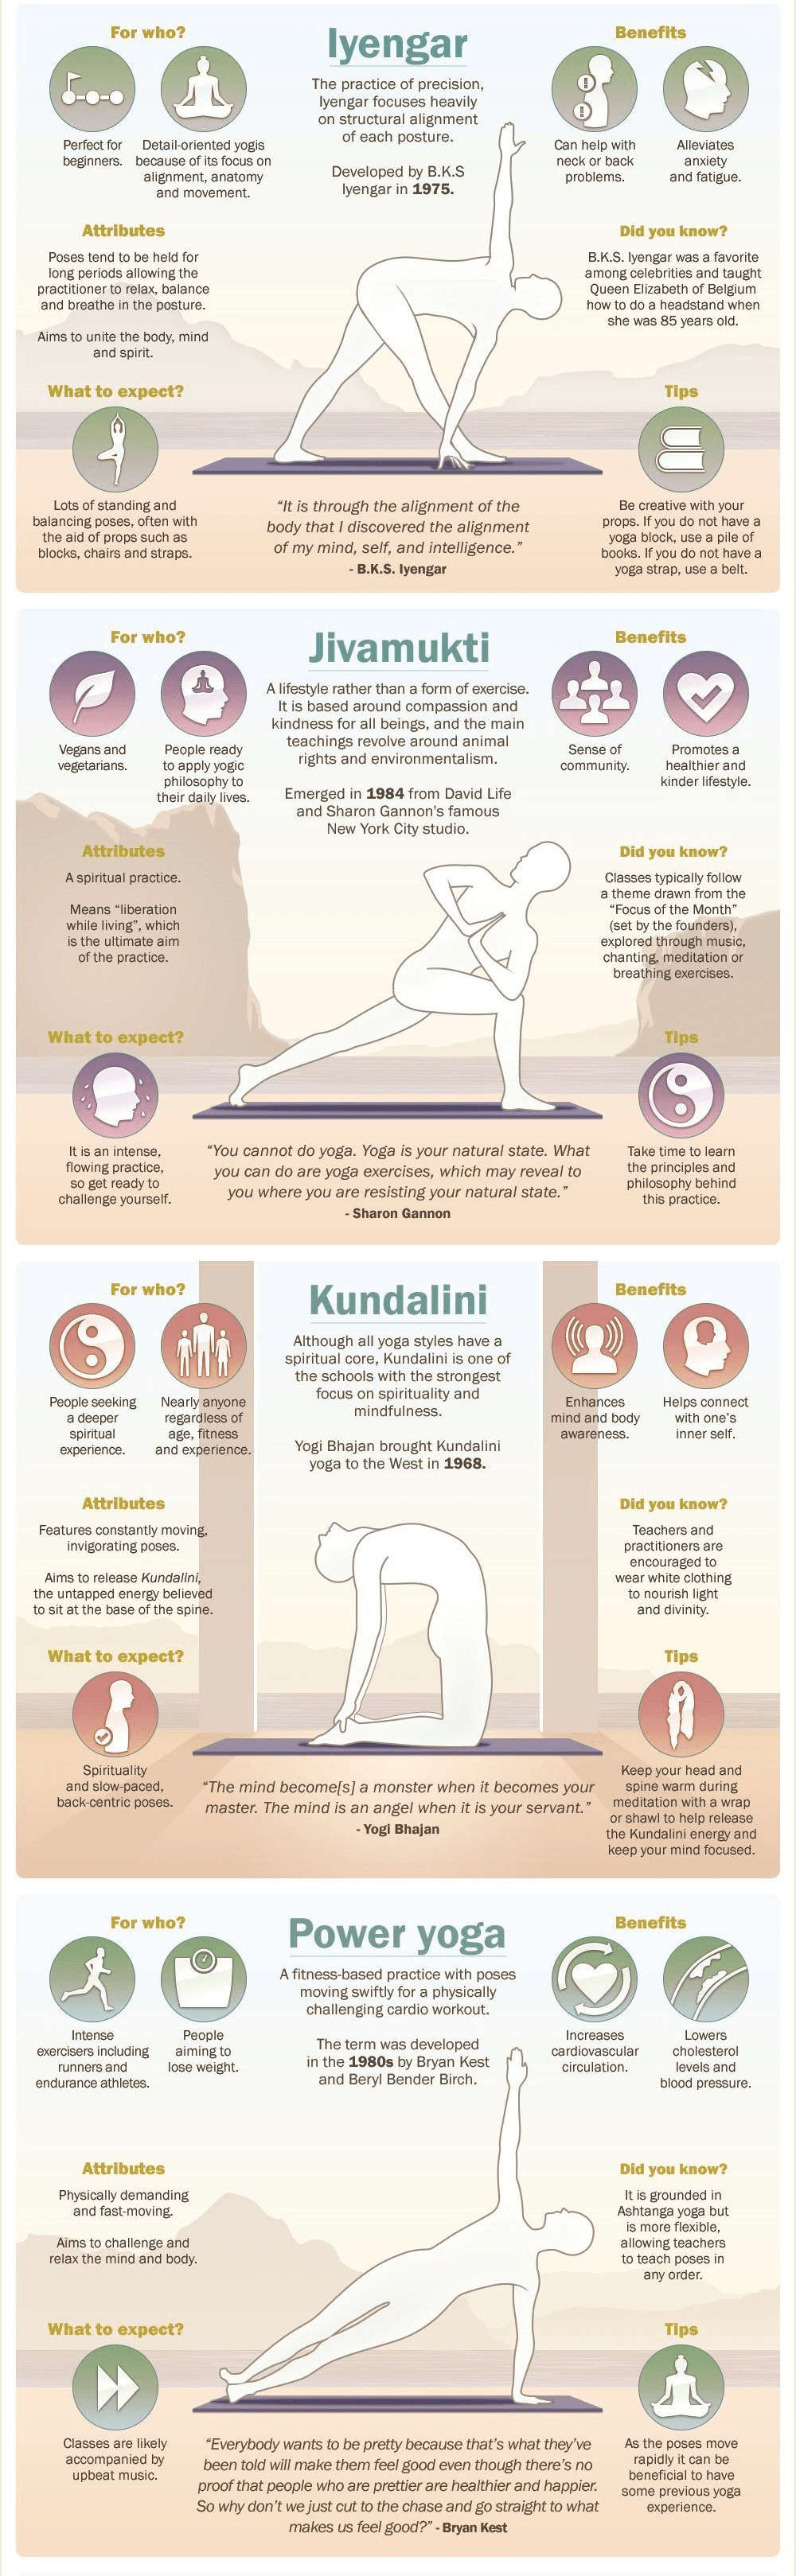 Most Popular Yoga Styles